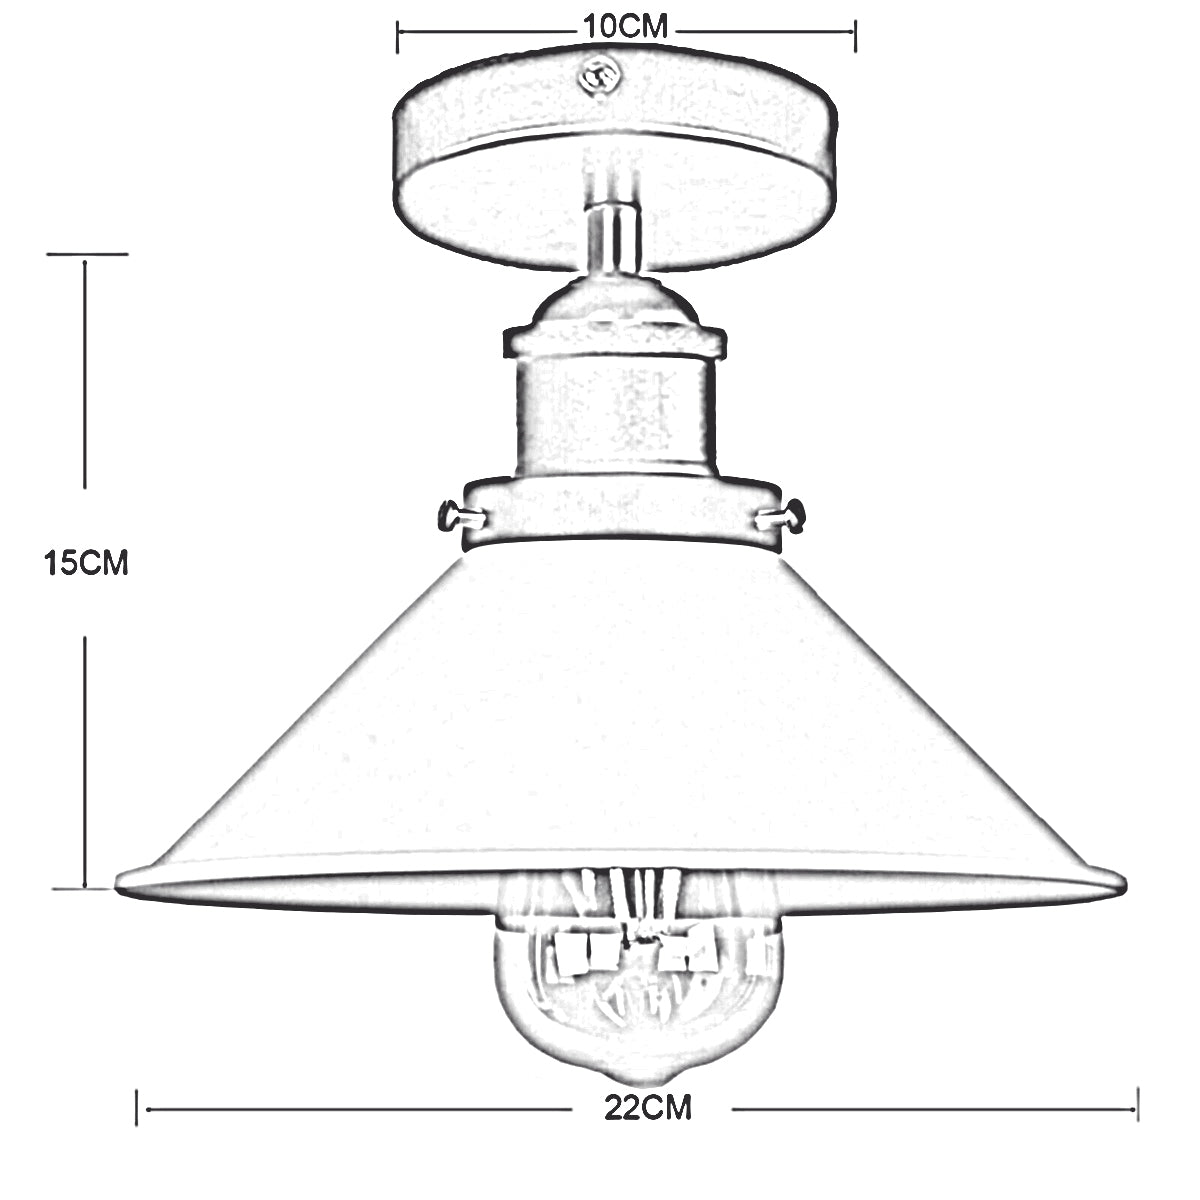 Vintage Industrial Ceiling Lights Retro Pendant Chrome Shade Sconce Lamp~2602 - LEDSone UK Ltd